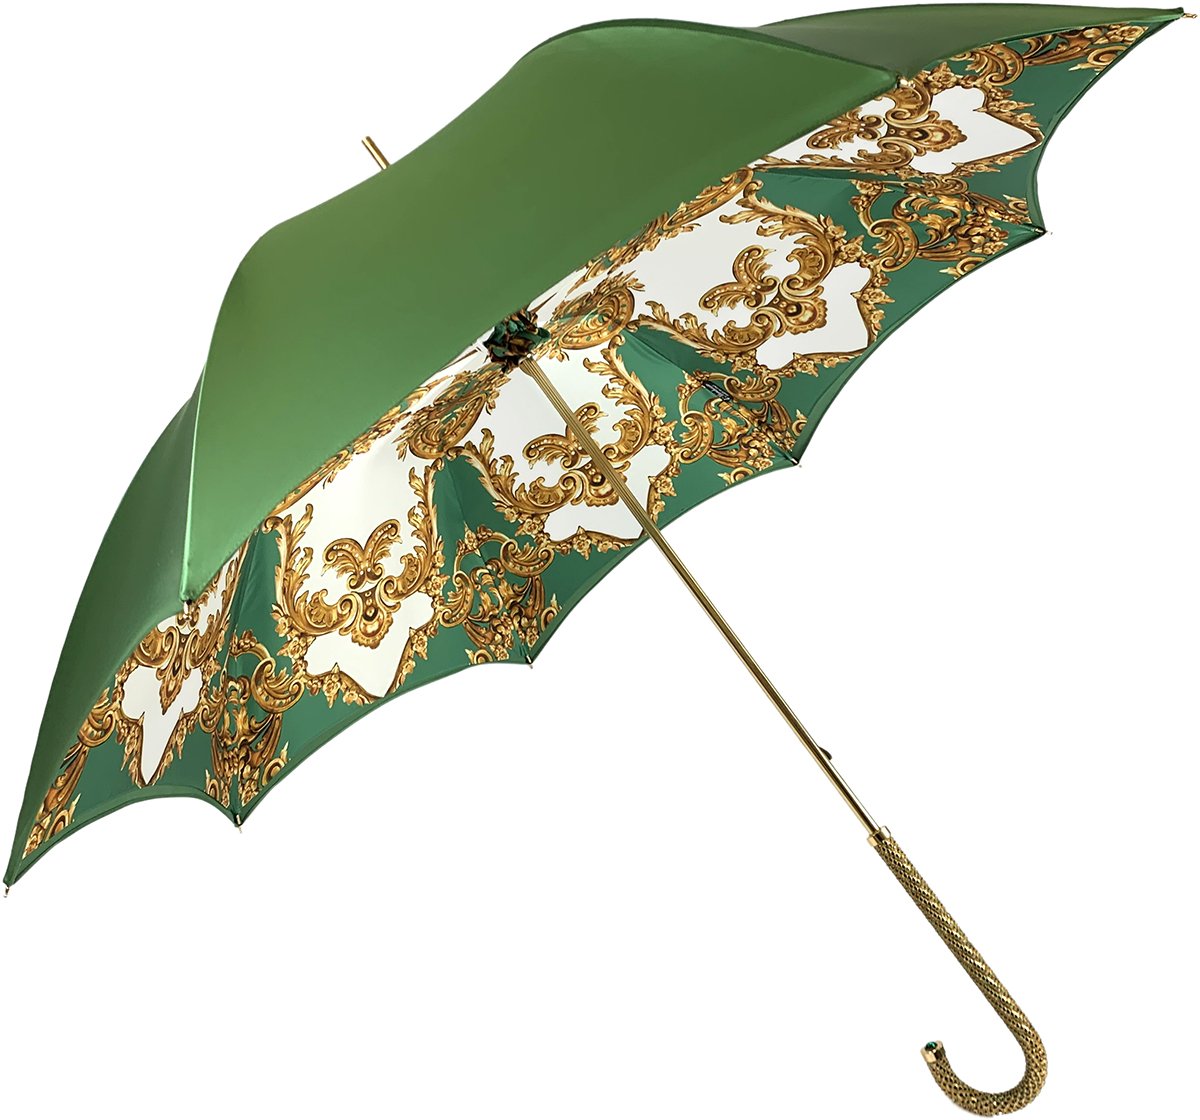 Women's Green Umbrella - IL MARCHESATO LUXURY UMBRELLAS, CANES AND SHOEHORNS